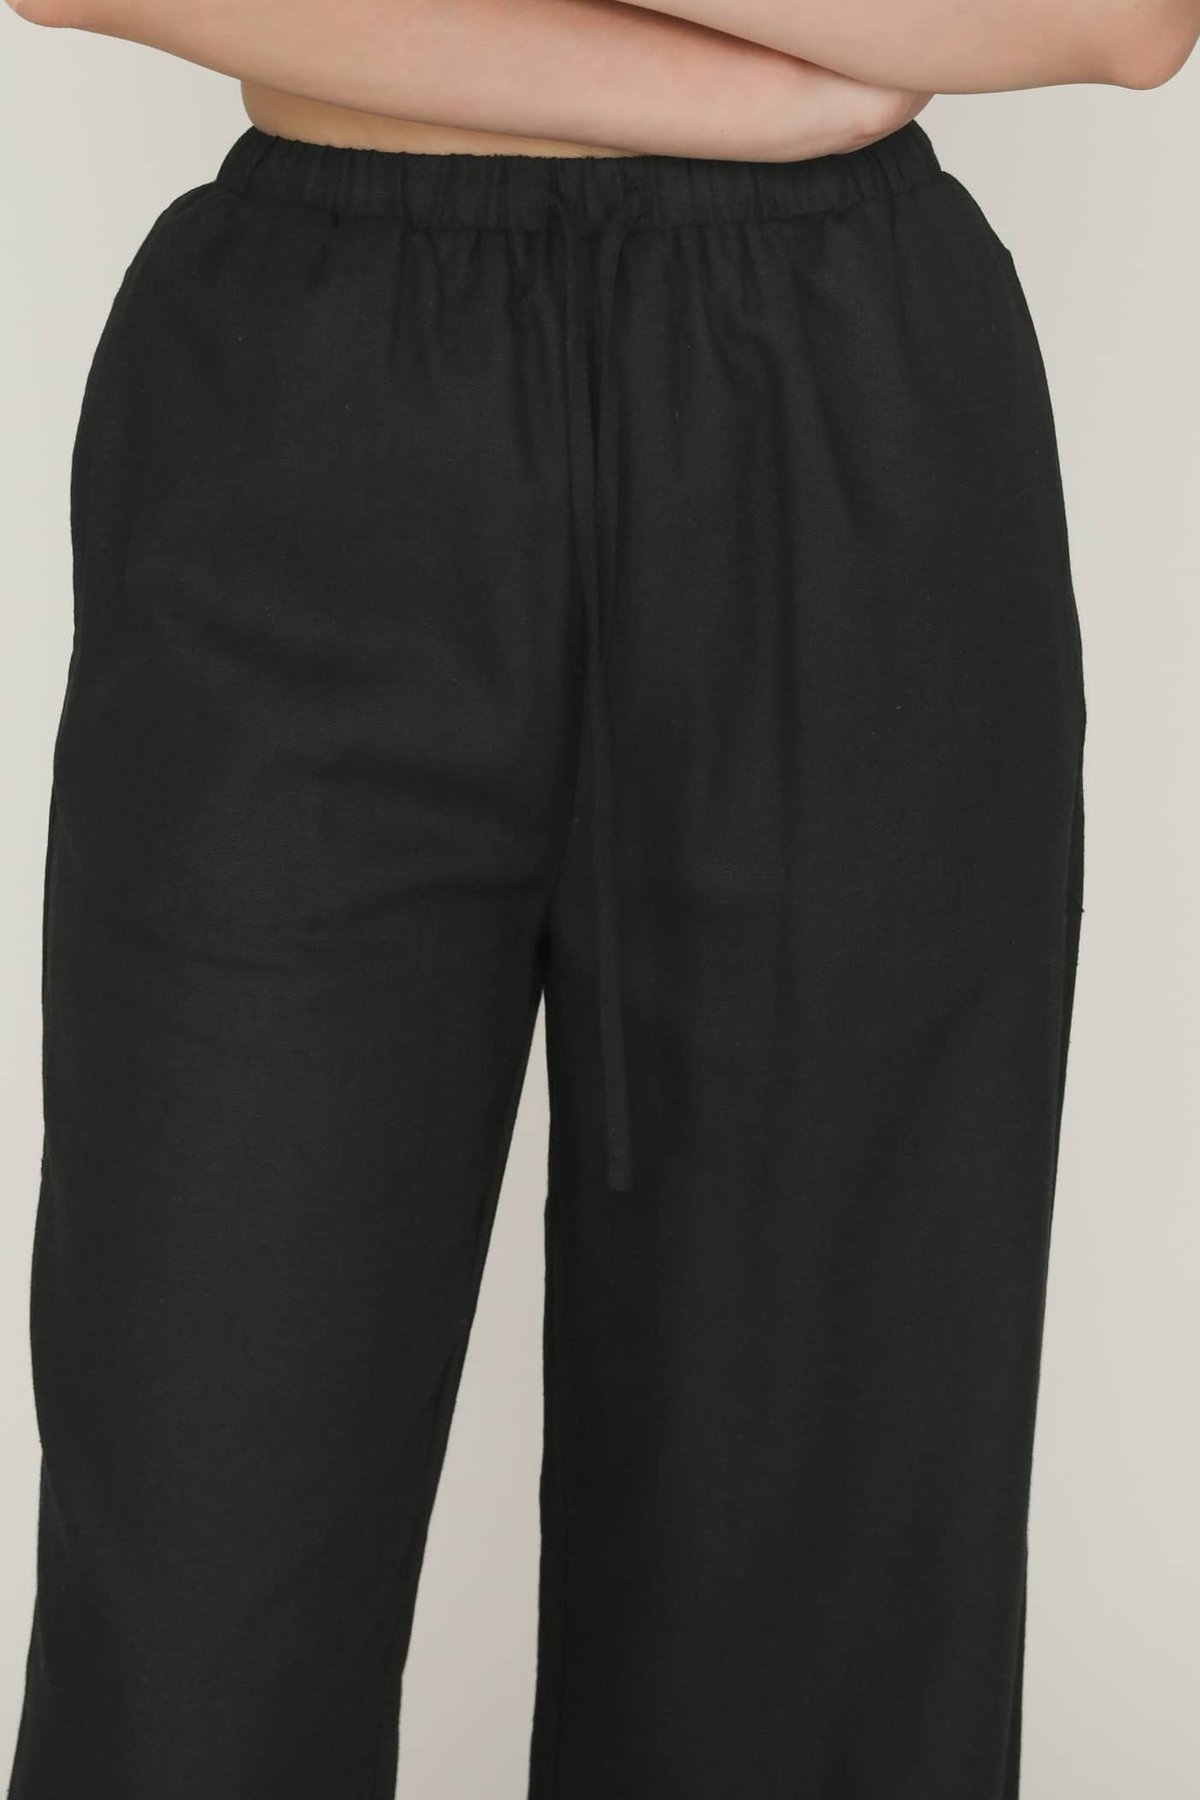 Petite Kierra Drawstring Linen Pants (Black)